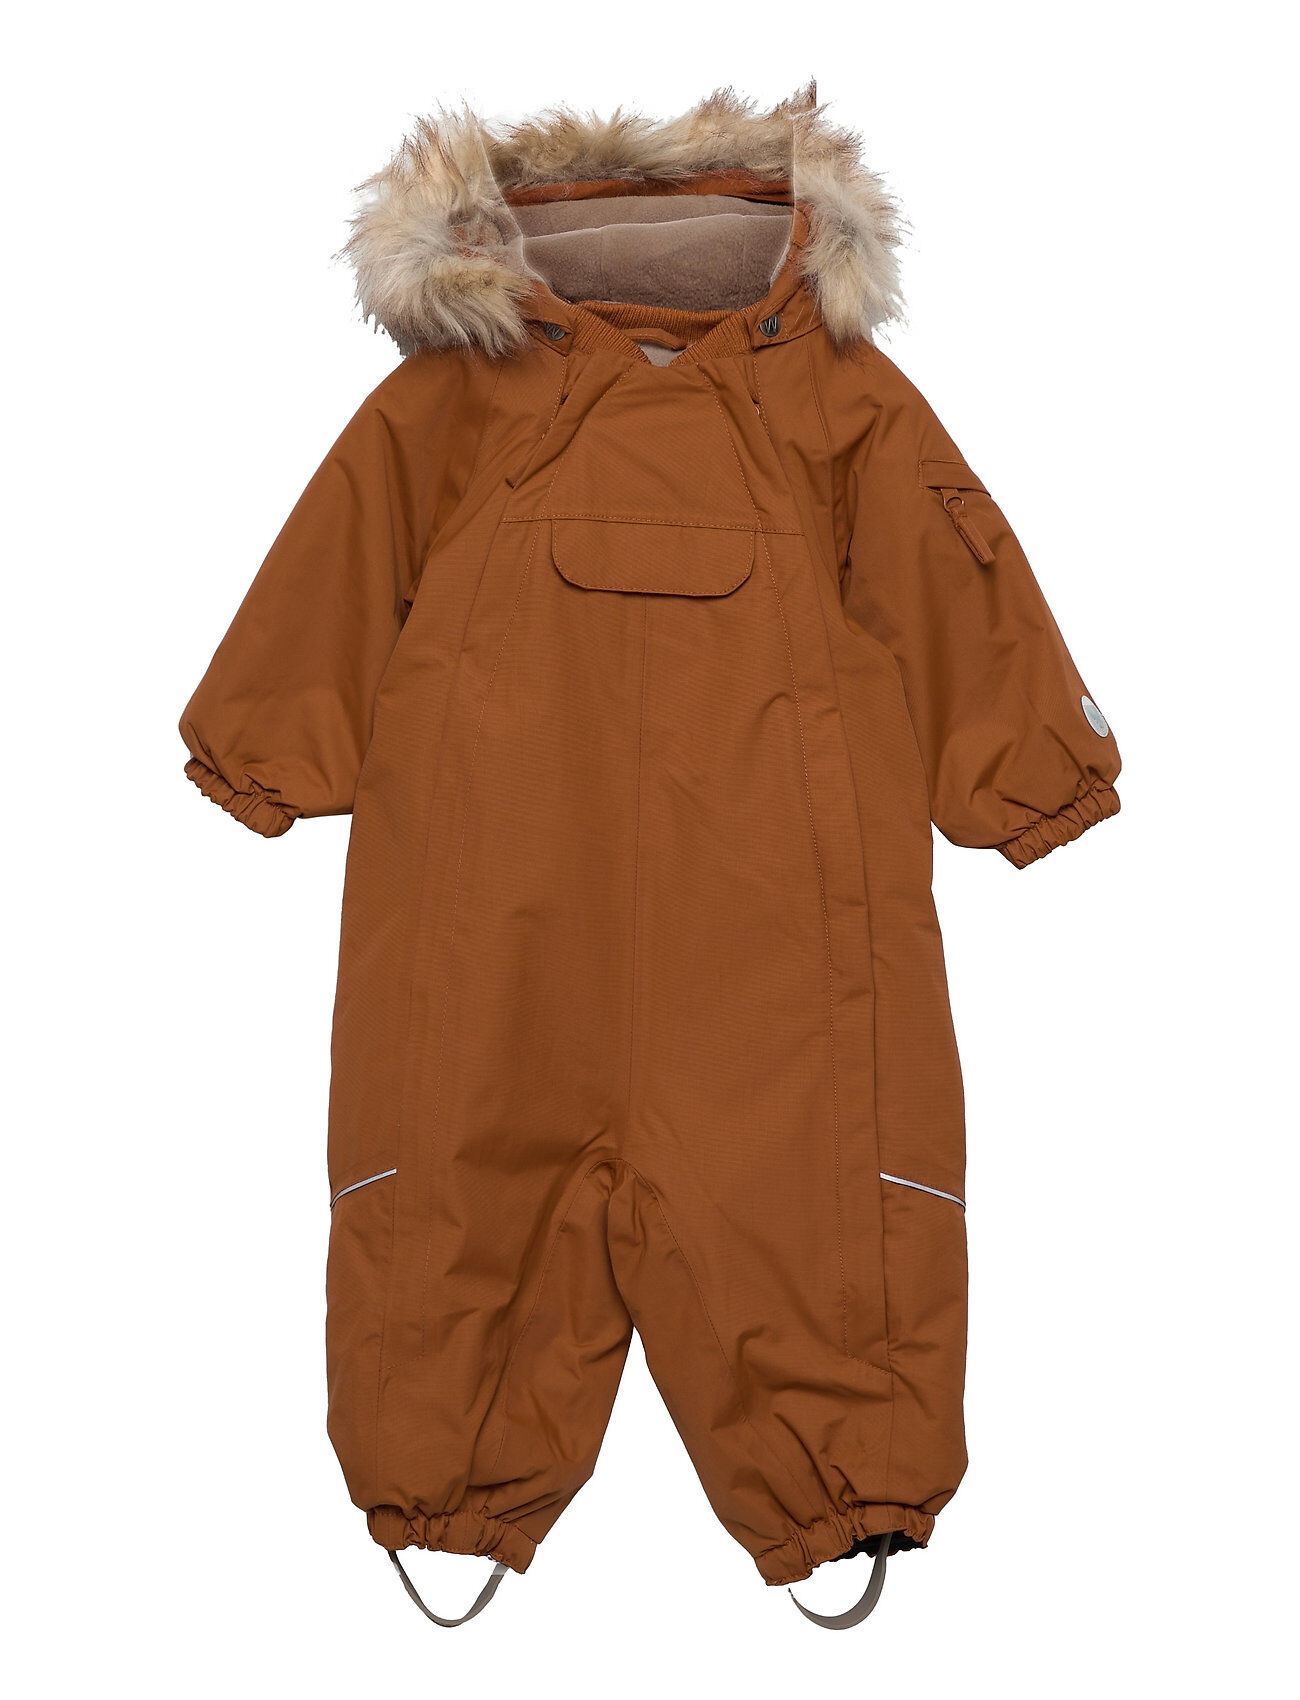 Wheat Snowsuit Nickie Tech Outerwear Snow/ski Clothing Snow/ski Coveralls & Sets Oransje Wheat